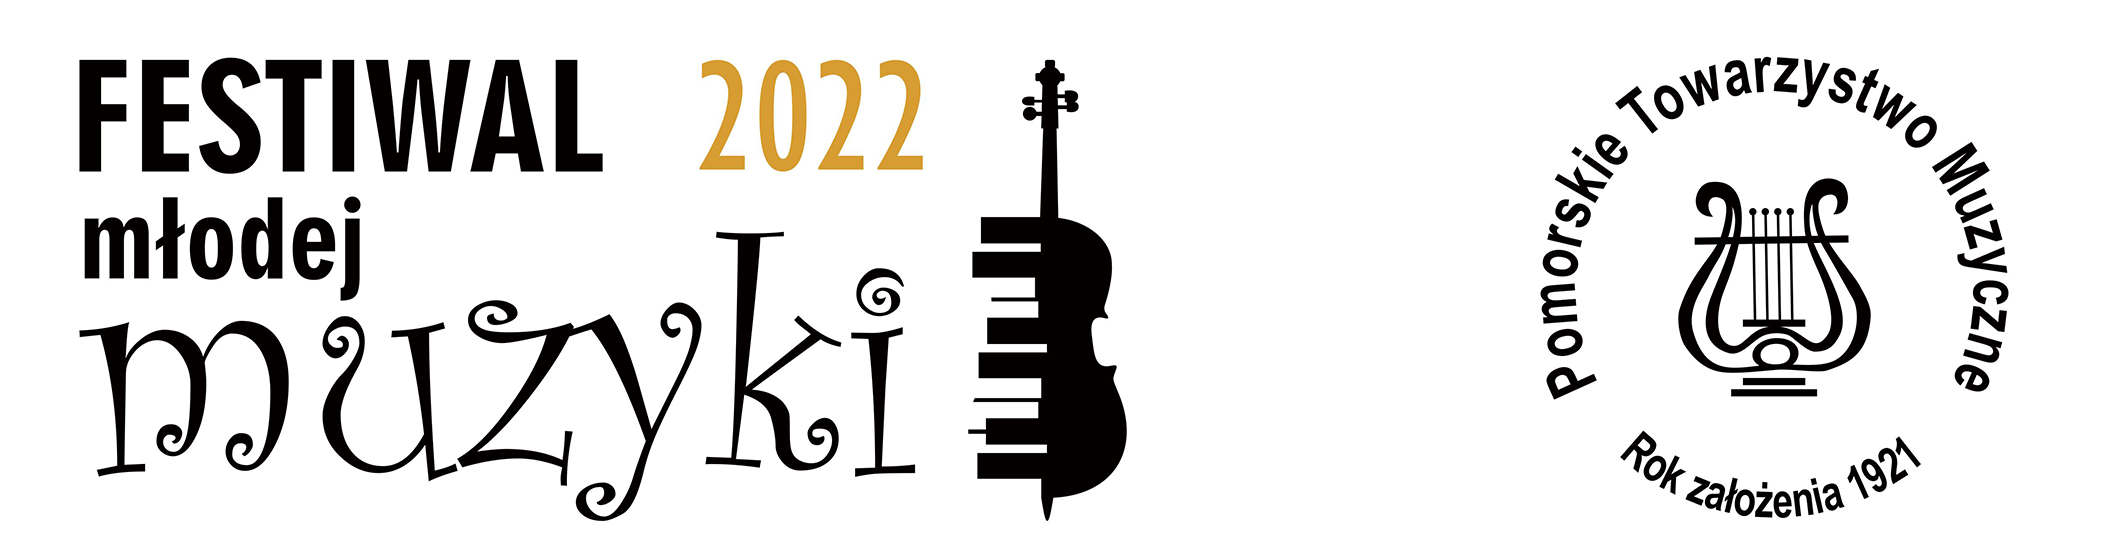 Baner Festiwalu Młedej Muzyki 2022 w Toruniu